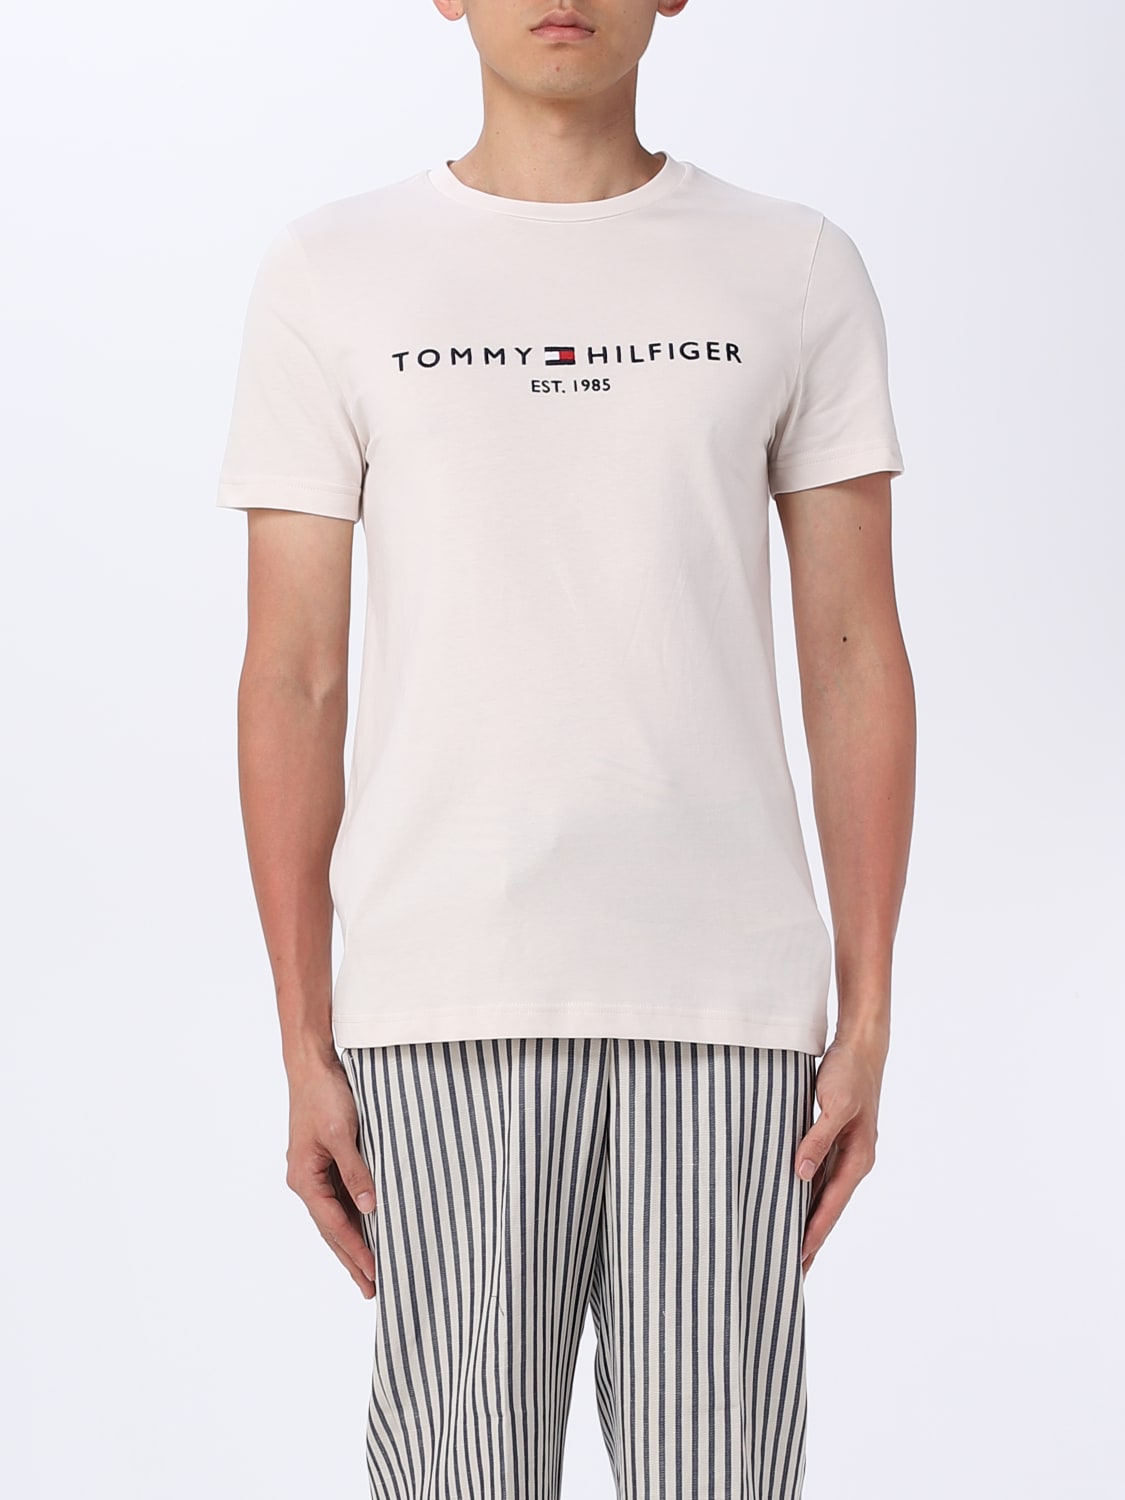 HILFIGER: t-shirt for man - White | Tommy Hilfiger t-shirt MW0MW11797 online GIGLIO.COM